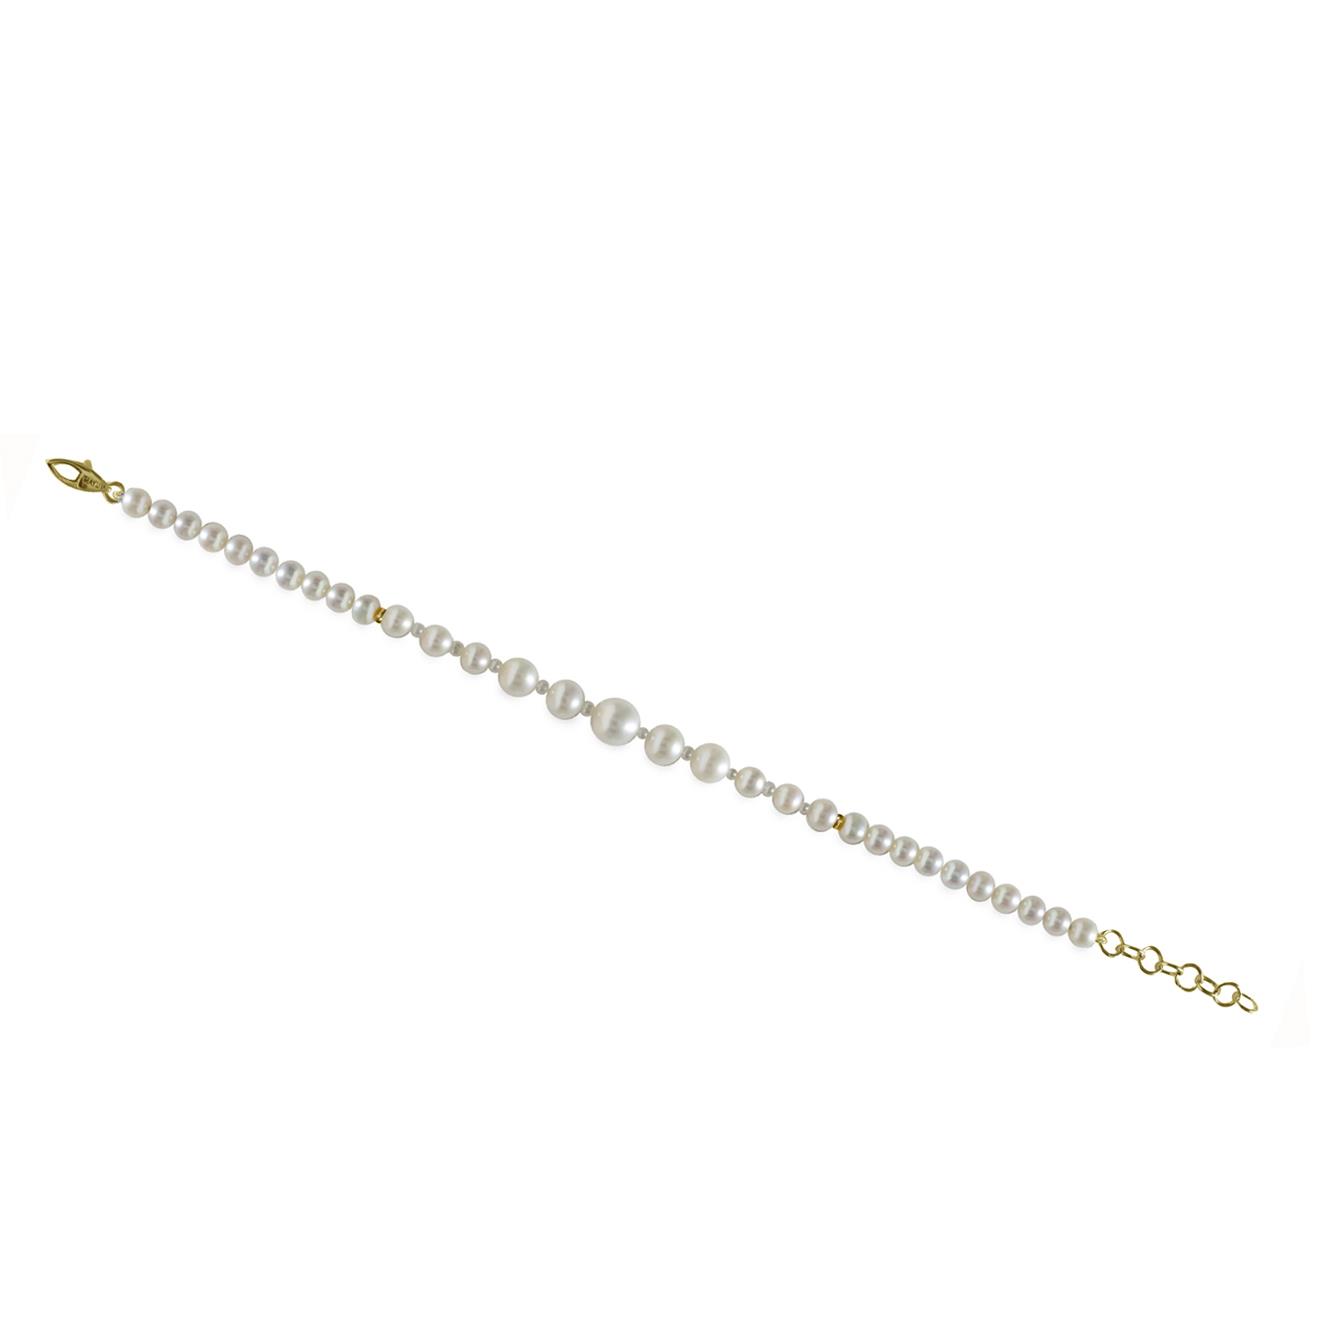 Gold bracelet with pearls - MAYUMI